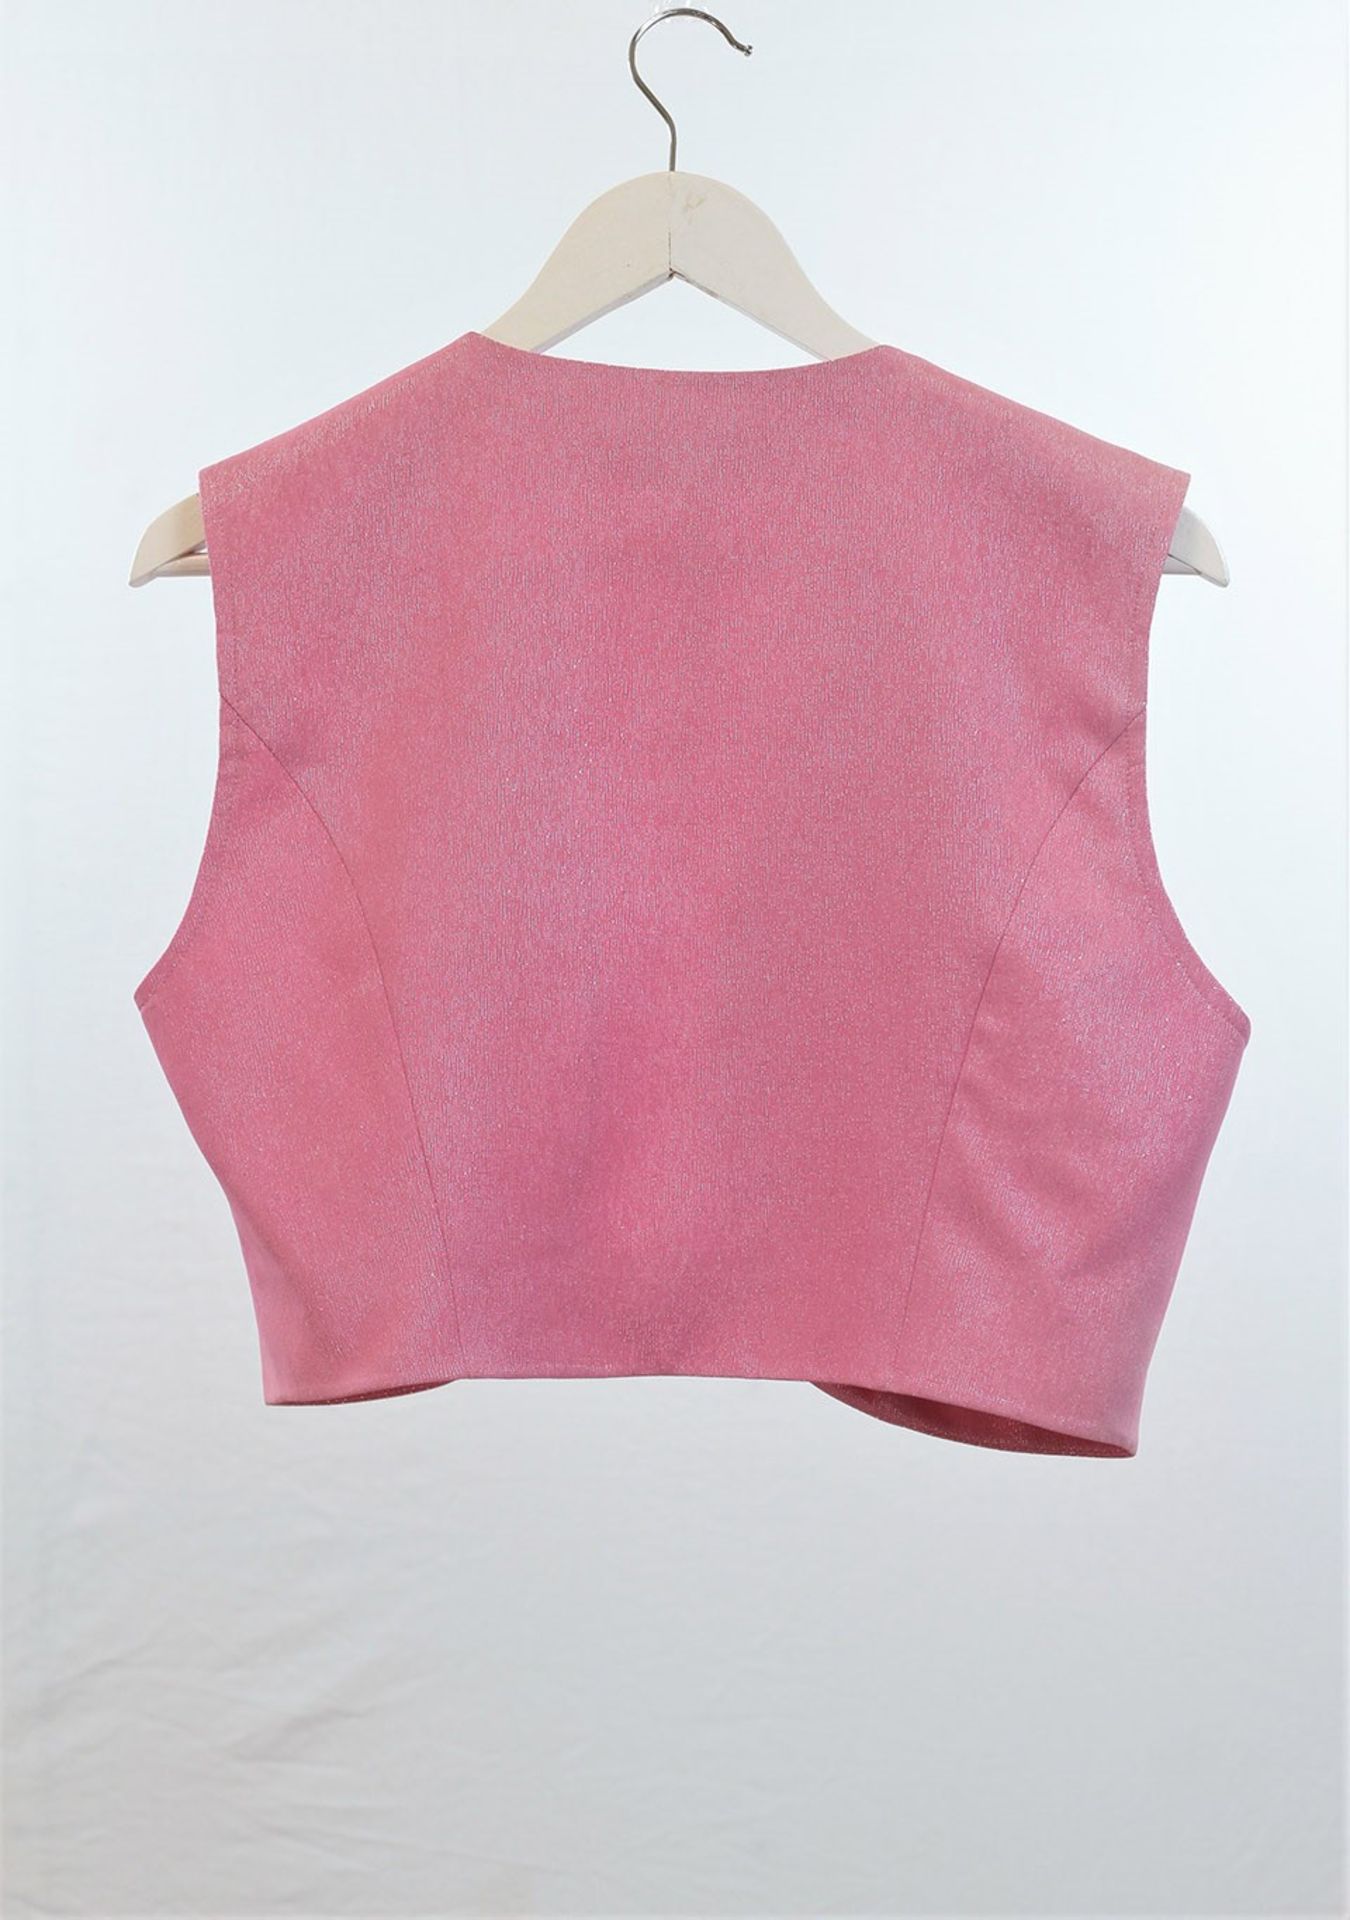 1 x Boutique Le Duc Pink Waistcoat - Size: L - Material: 49% Cotton, 40% Acetate, 11% Poly metal - Image 2 of 7